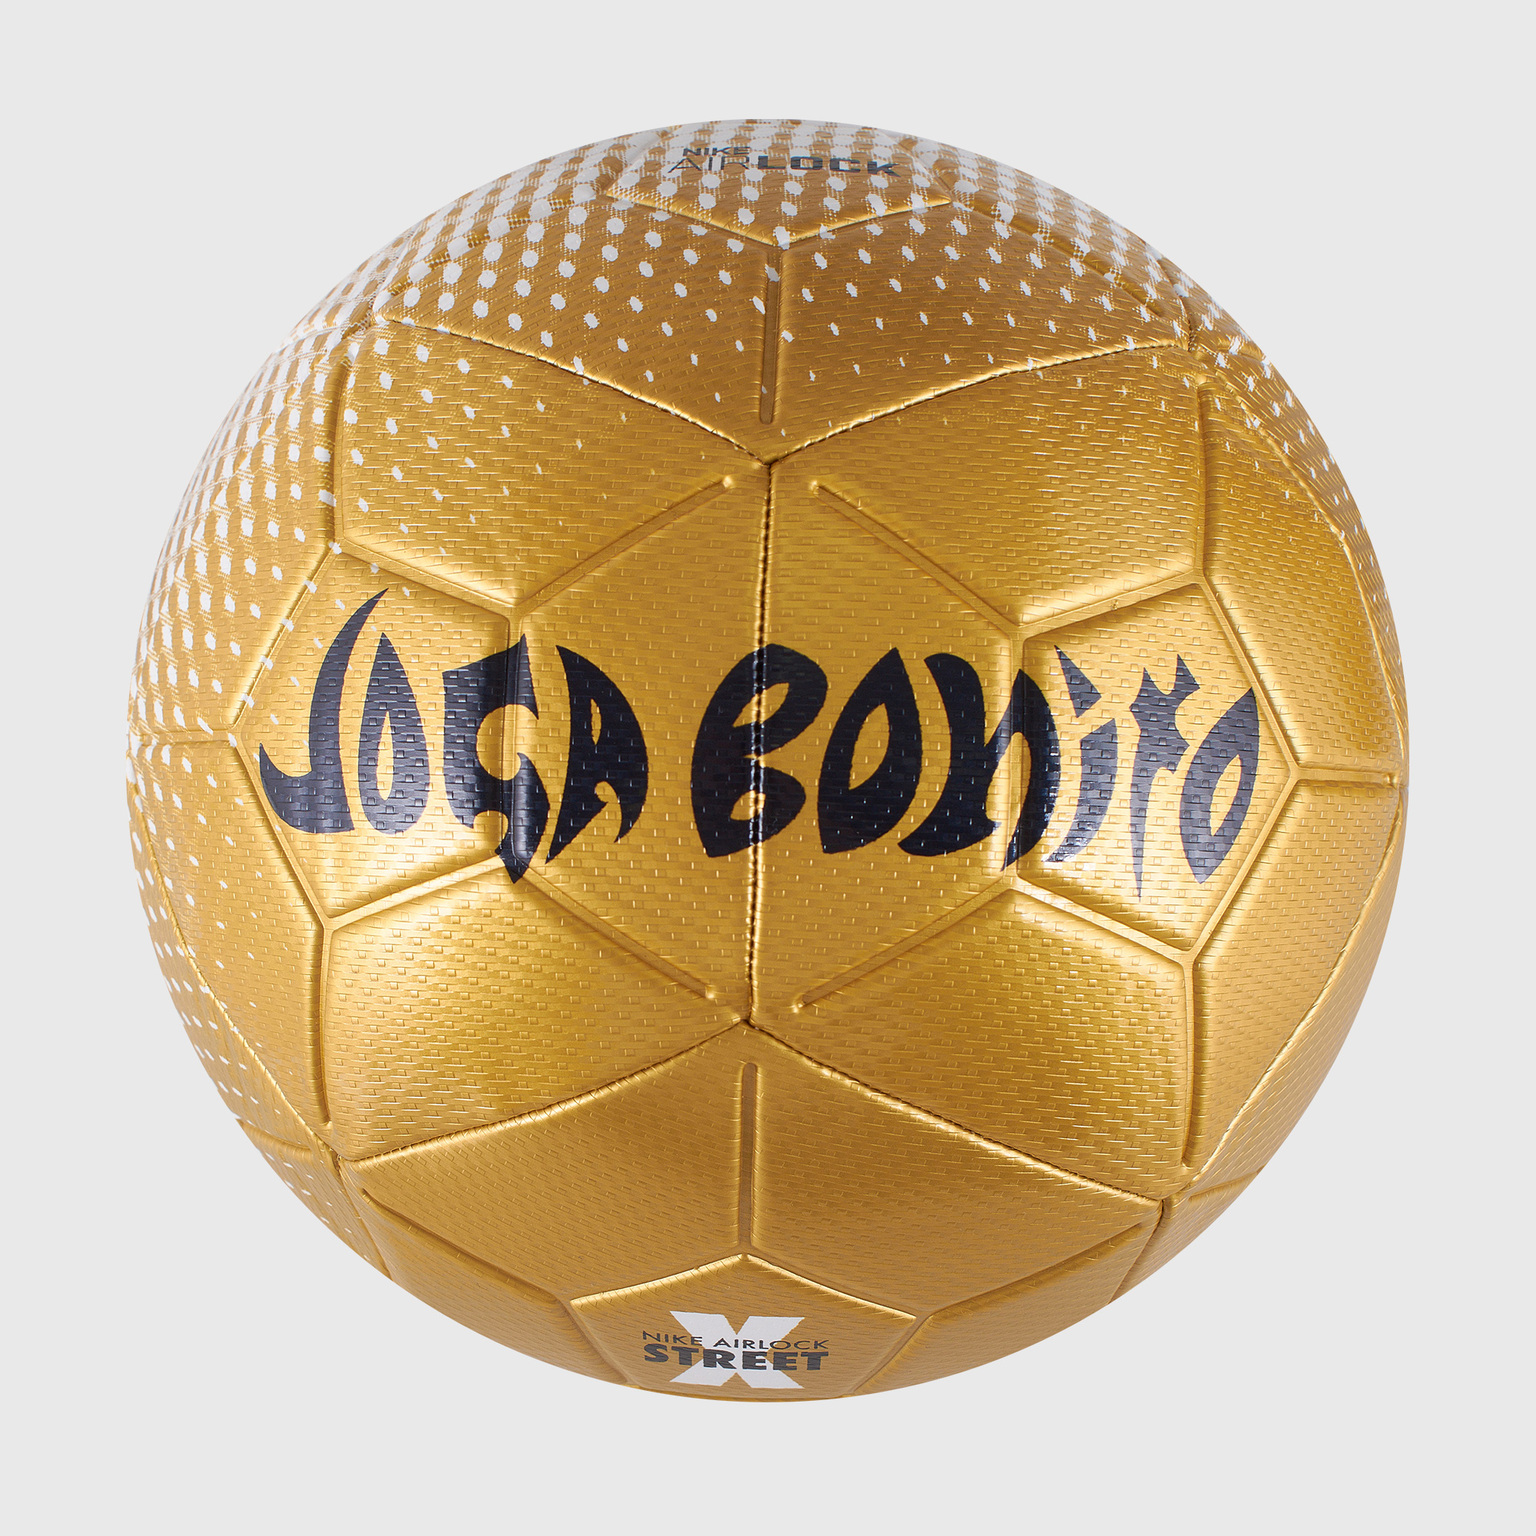 Футбольный мяч Nike Airlock Street X-Joga DD7131-100